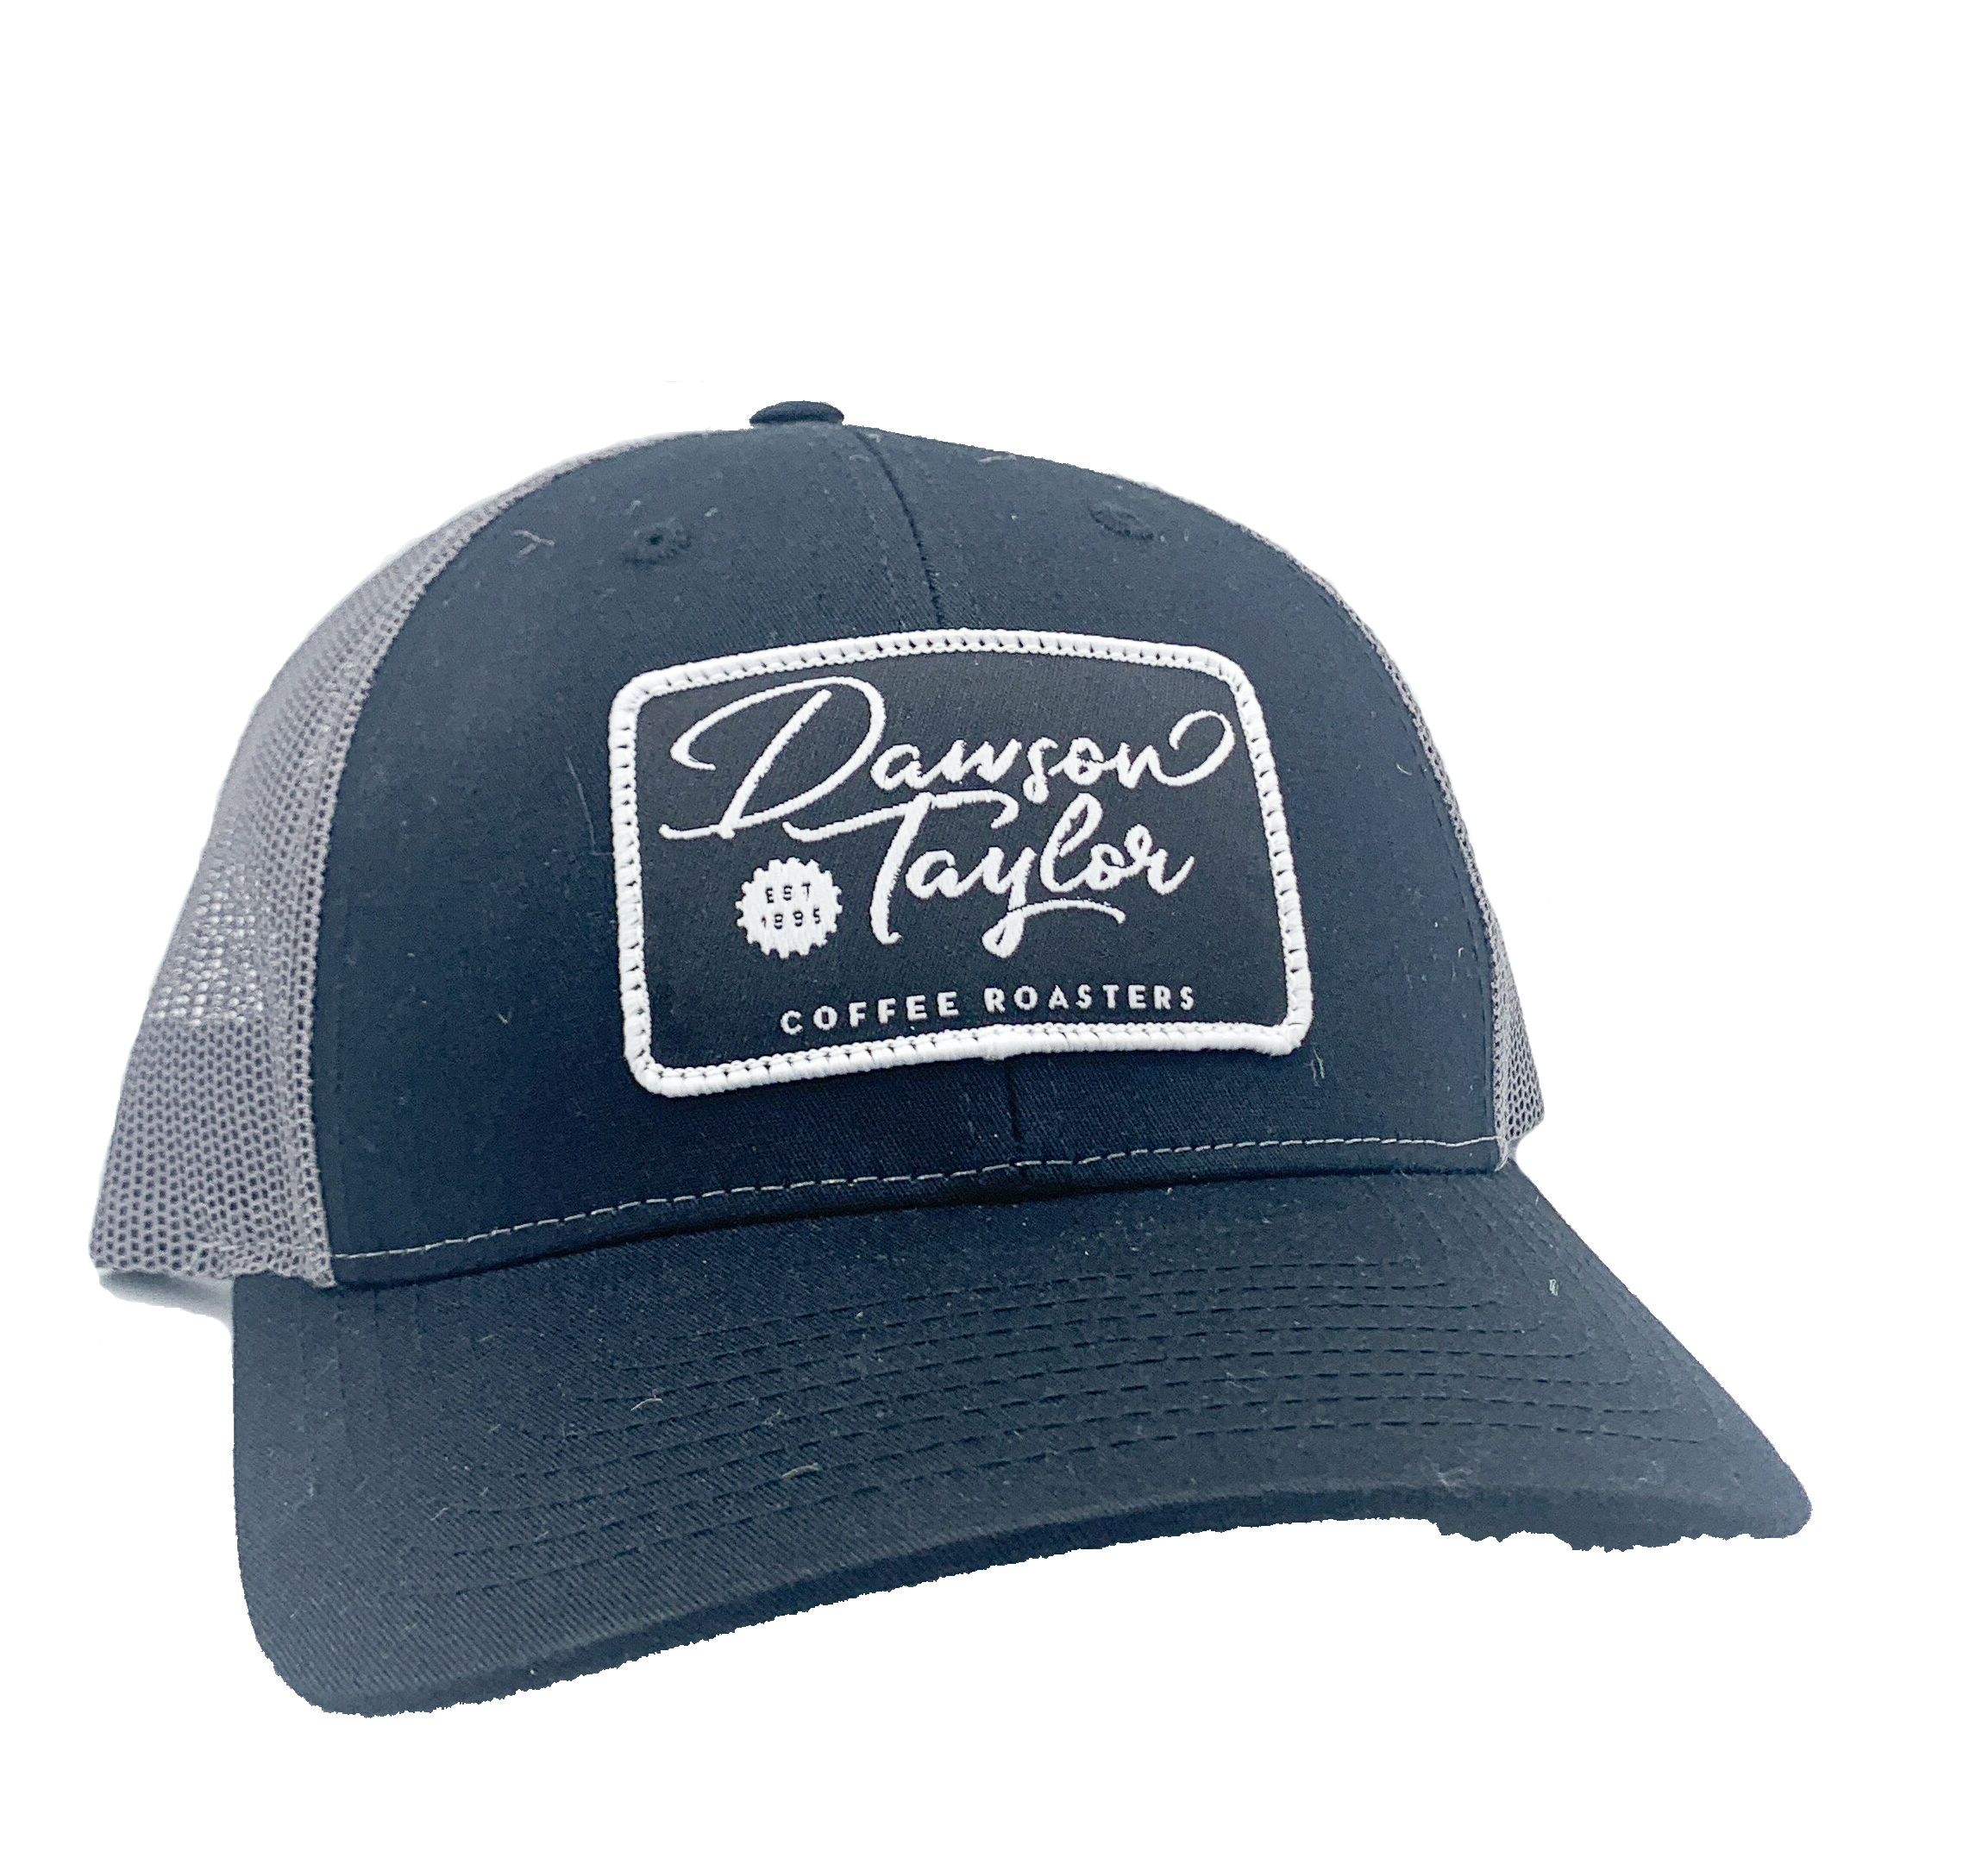 Dawson Taylor Trucker Hat